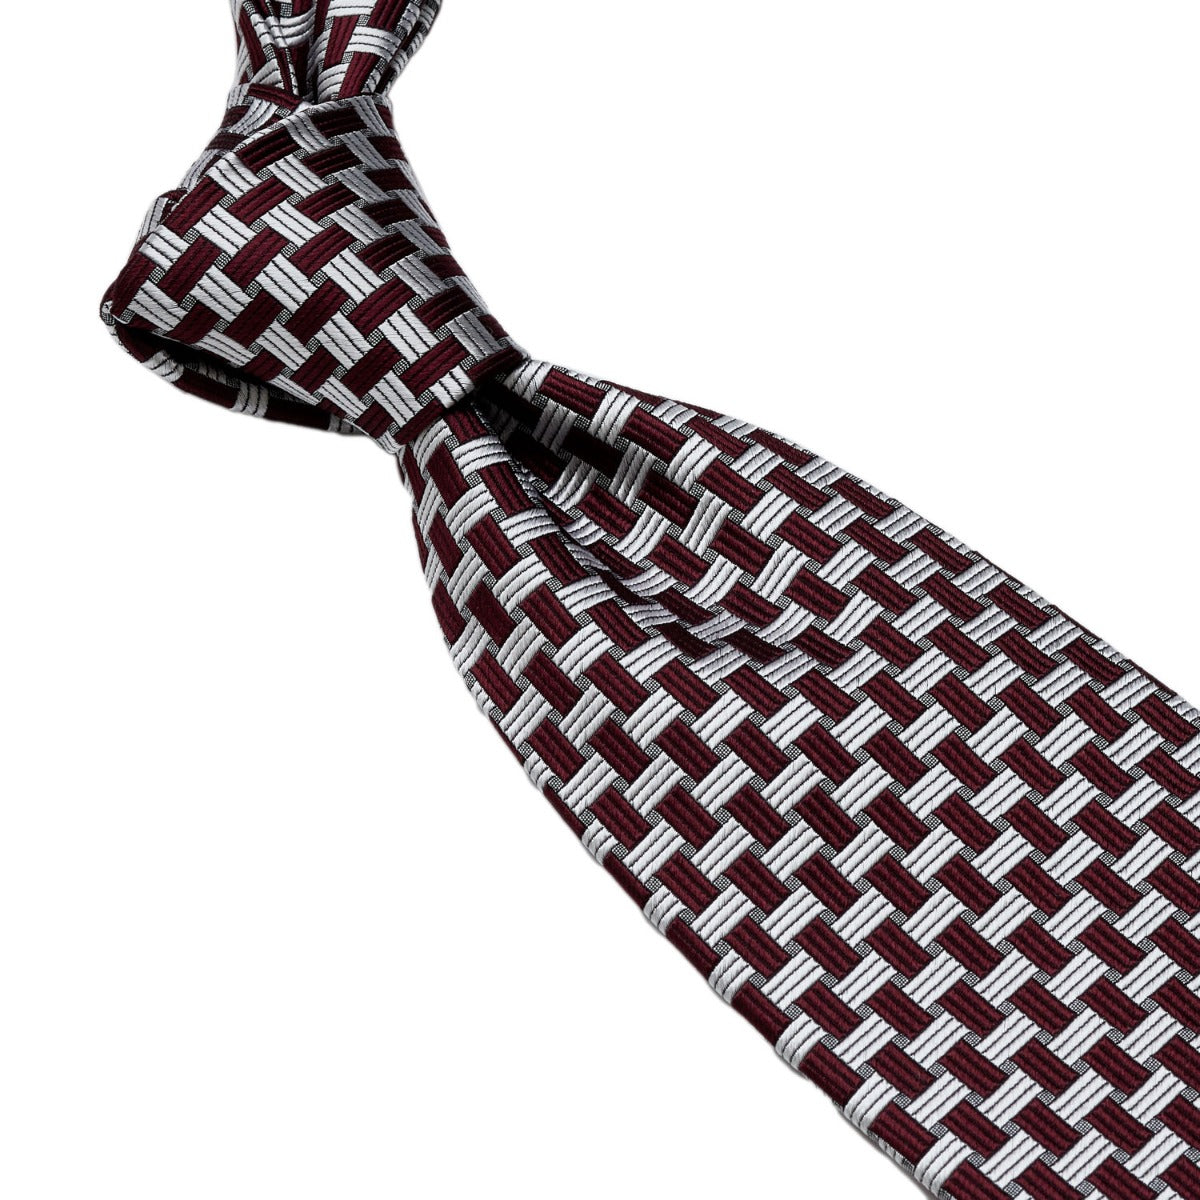 A highest quality Sovereign Grade Oxblood Basket Weave Silk Tie from KirbyAllison.com.